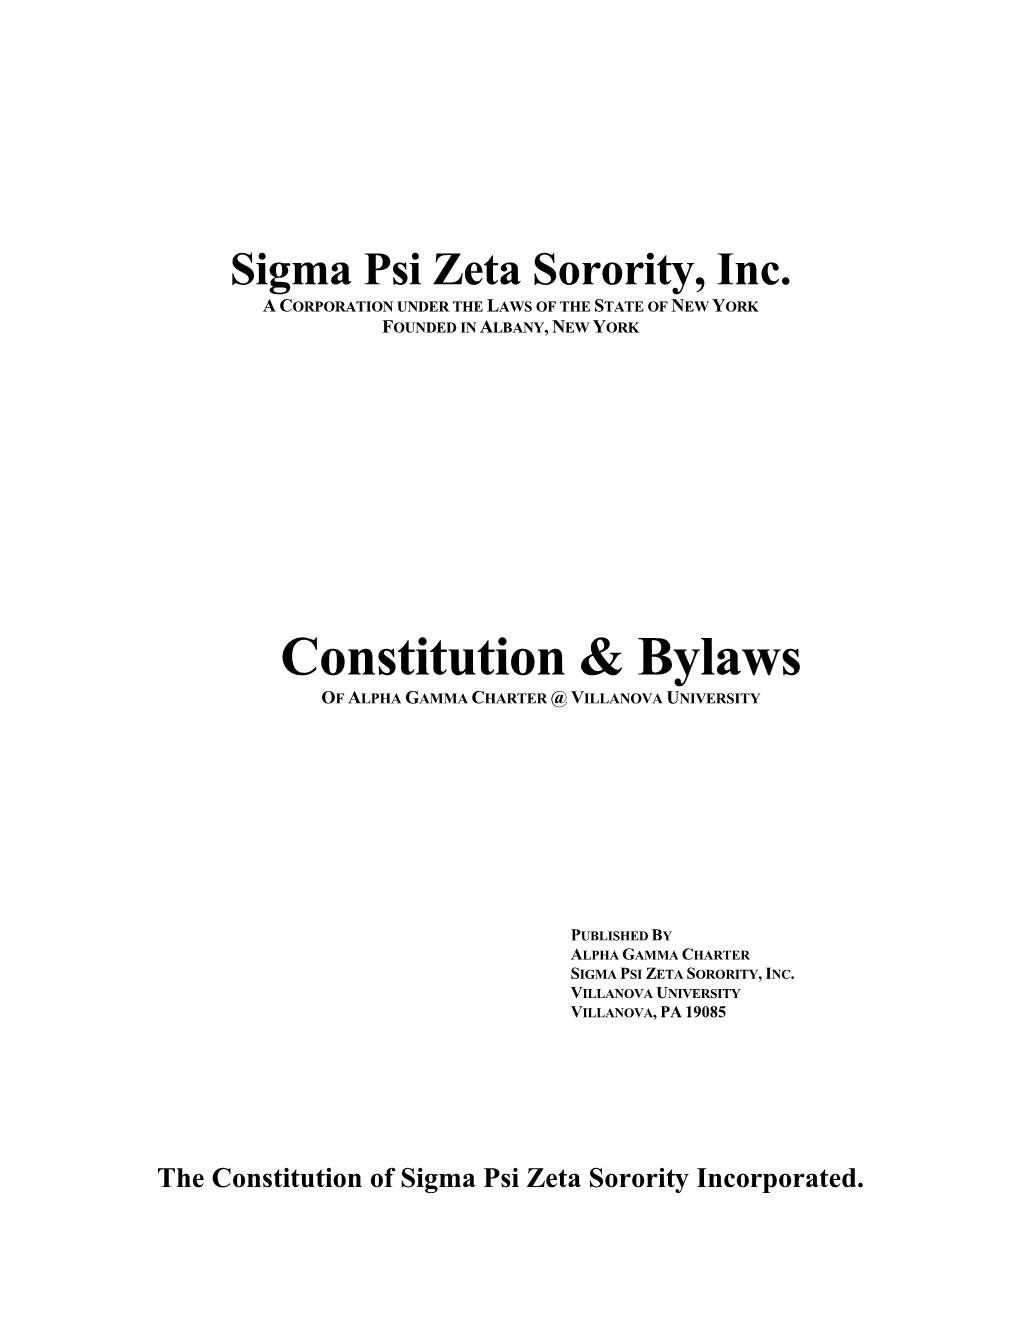 The Constitution of Sigma Psi Zeta Sorority Inc